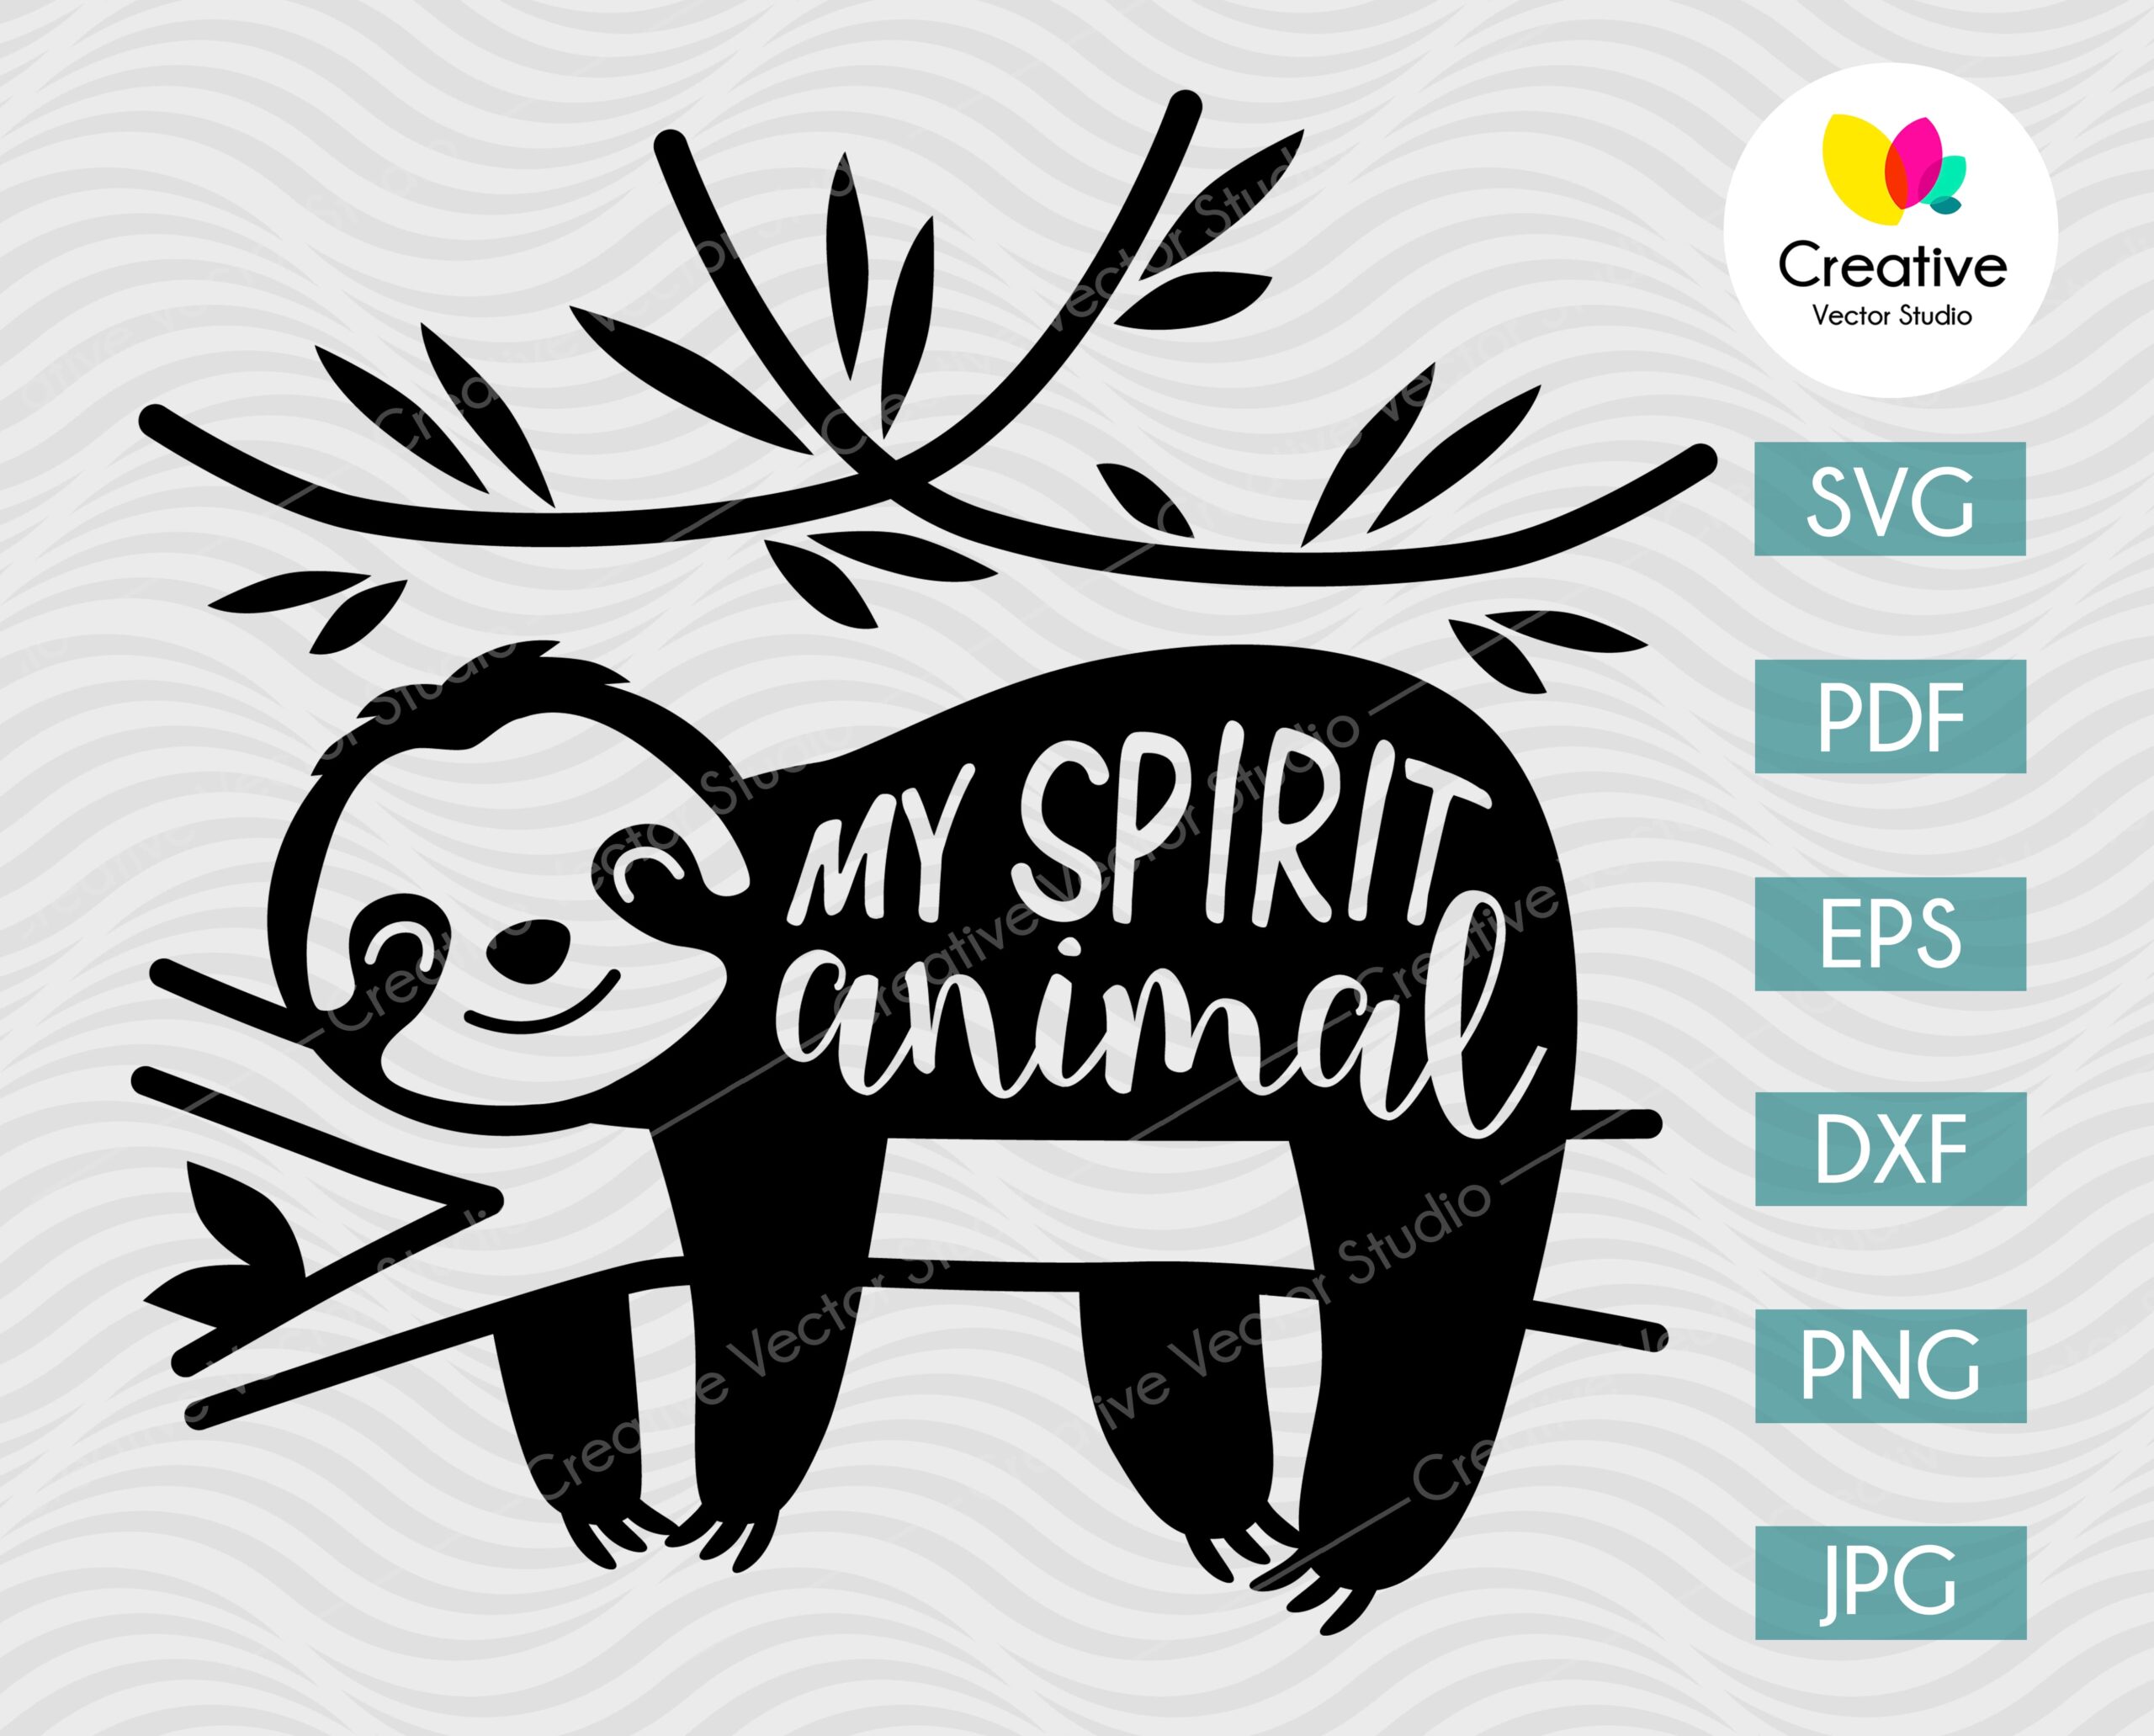 My Spirit Animal Sloth SVG - Creative Vector Studio